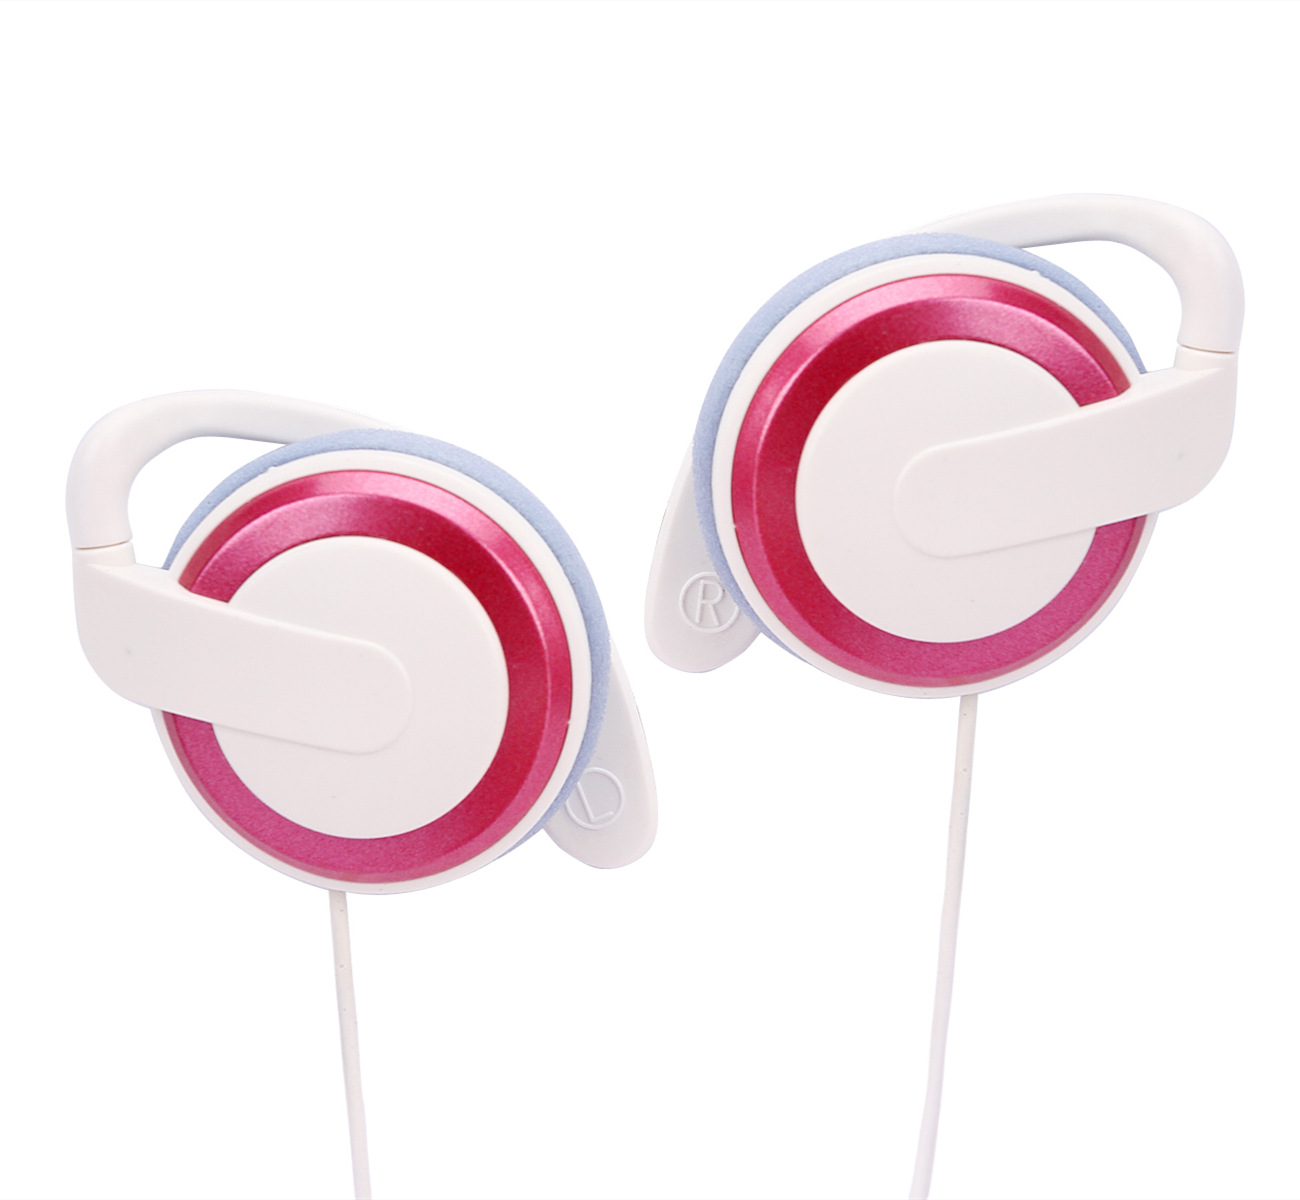 耳挂式运动耳机Wired music headphones sport Headset earphones